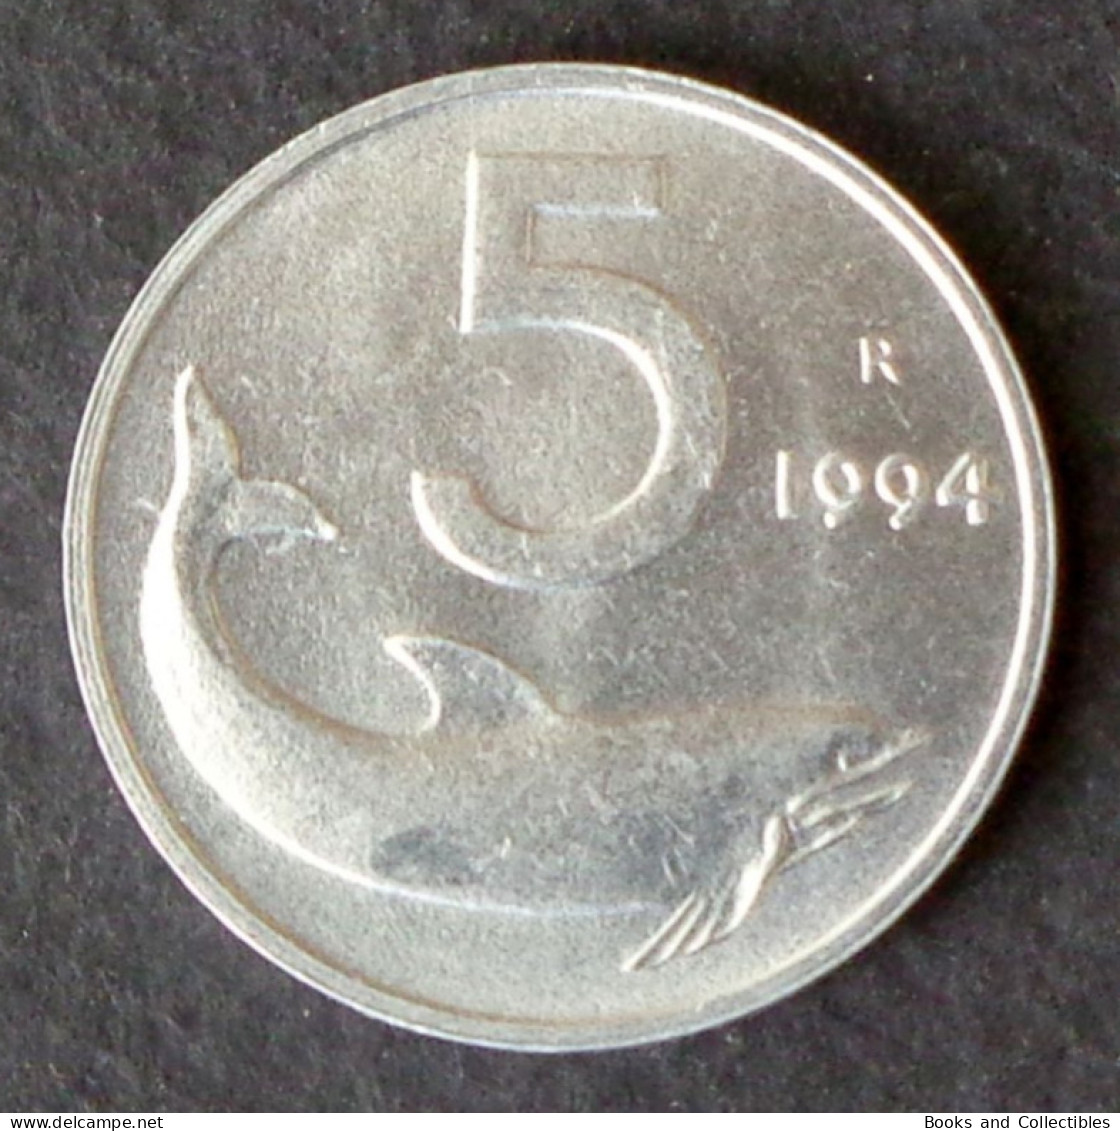 ITALY - 5 Lira 1994 - KM# 92 * Ref. 0199 - 5 Liras